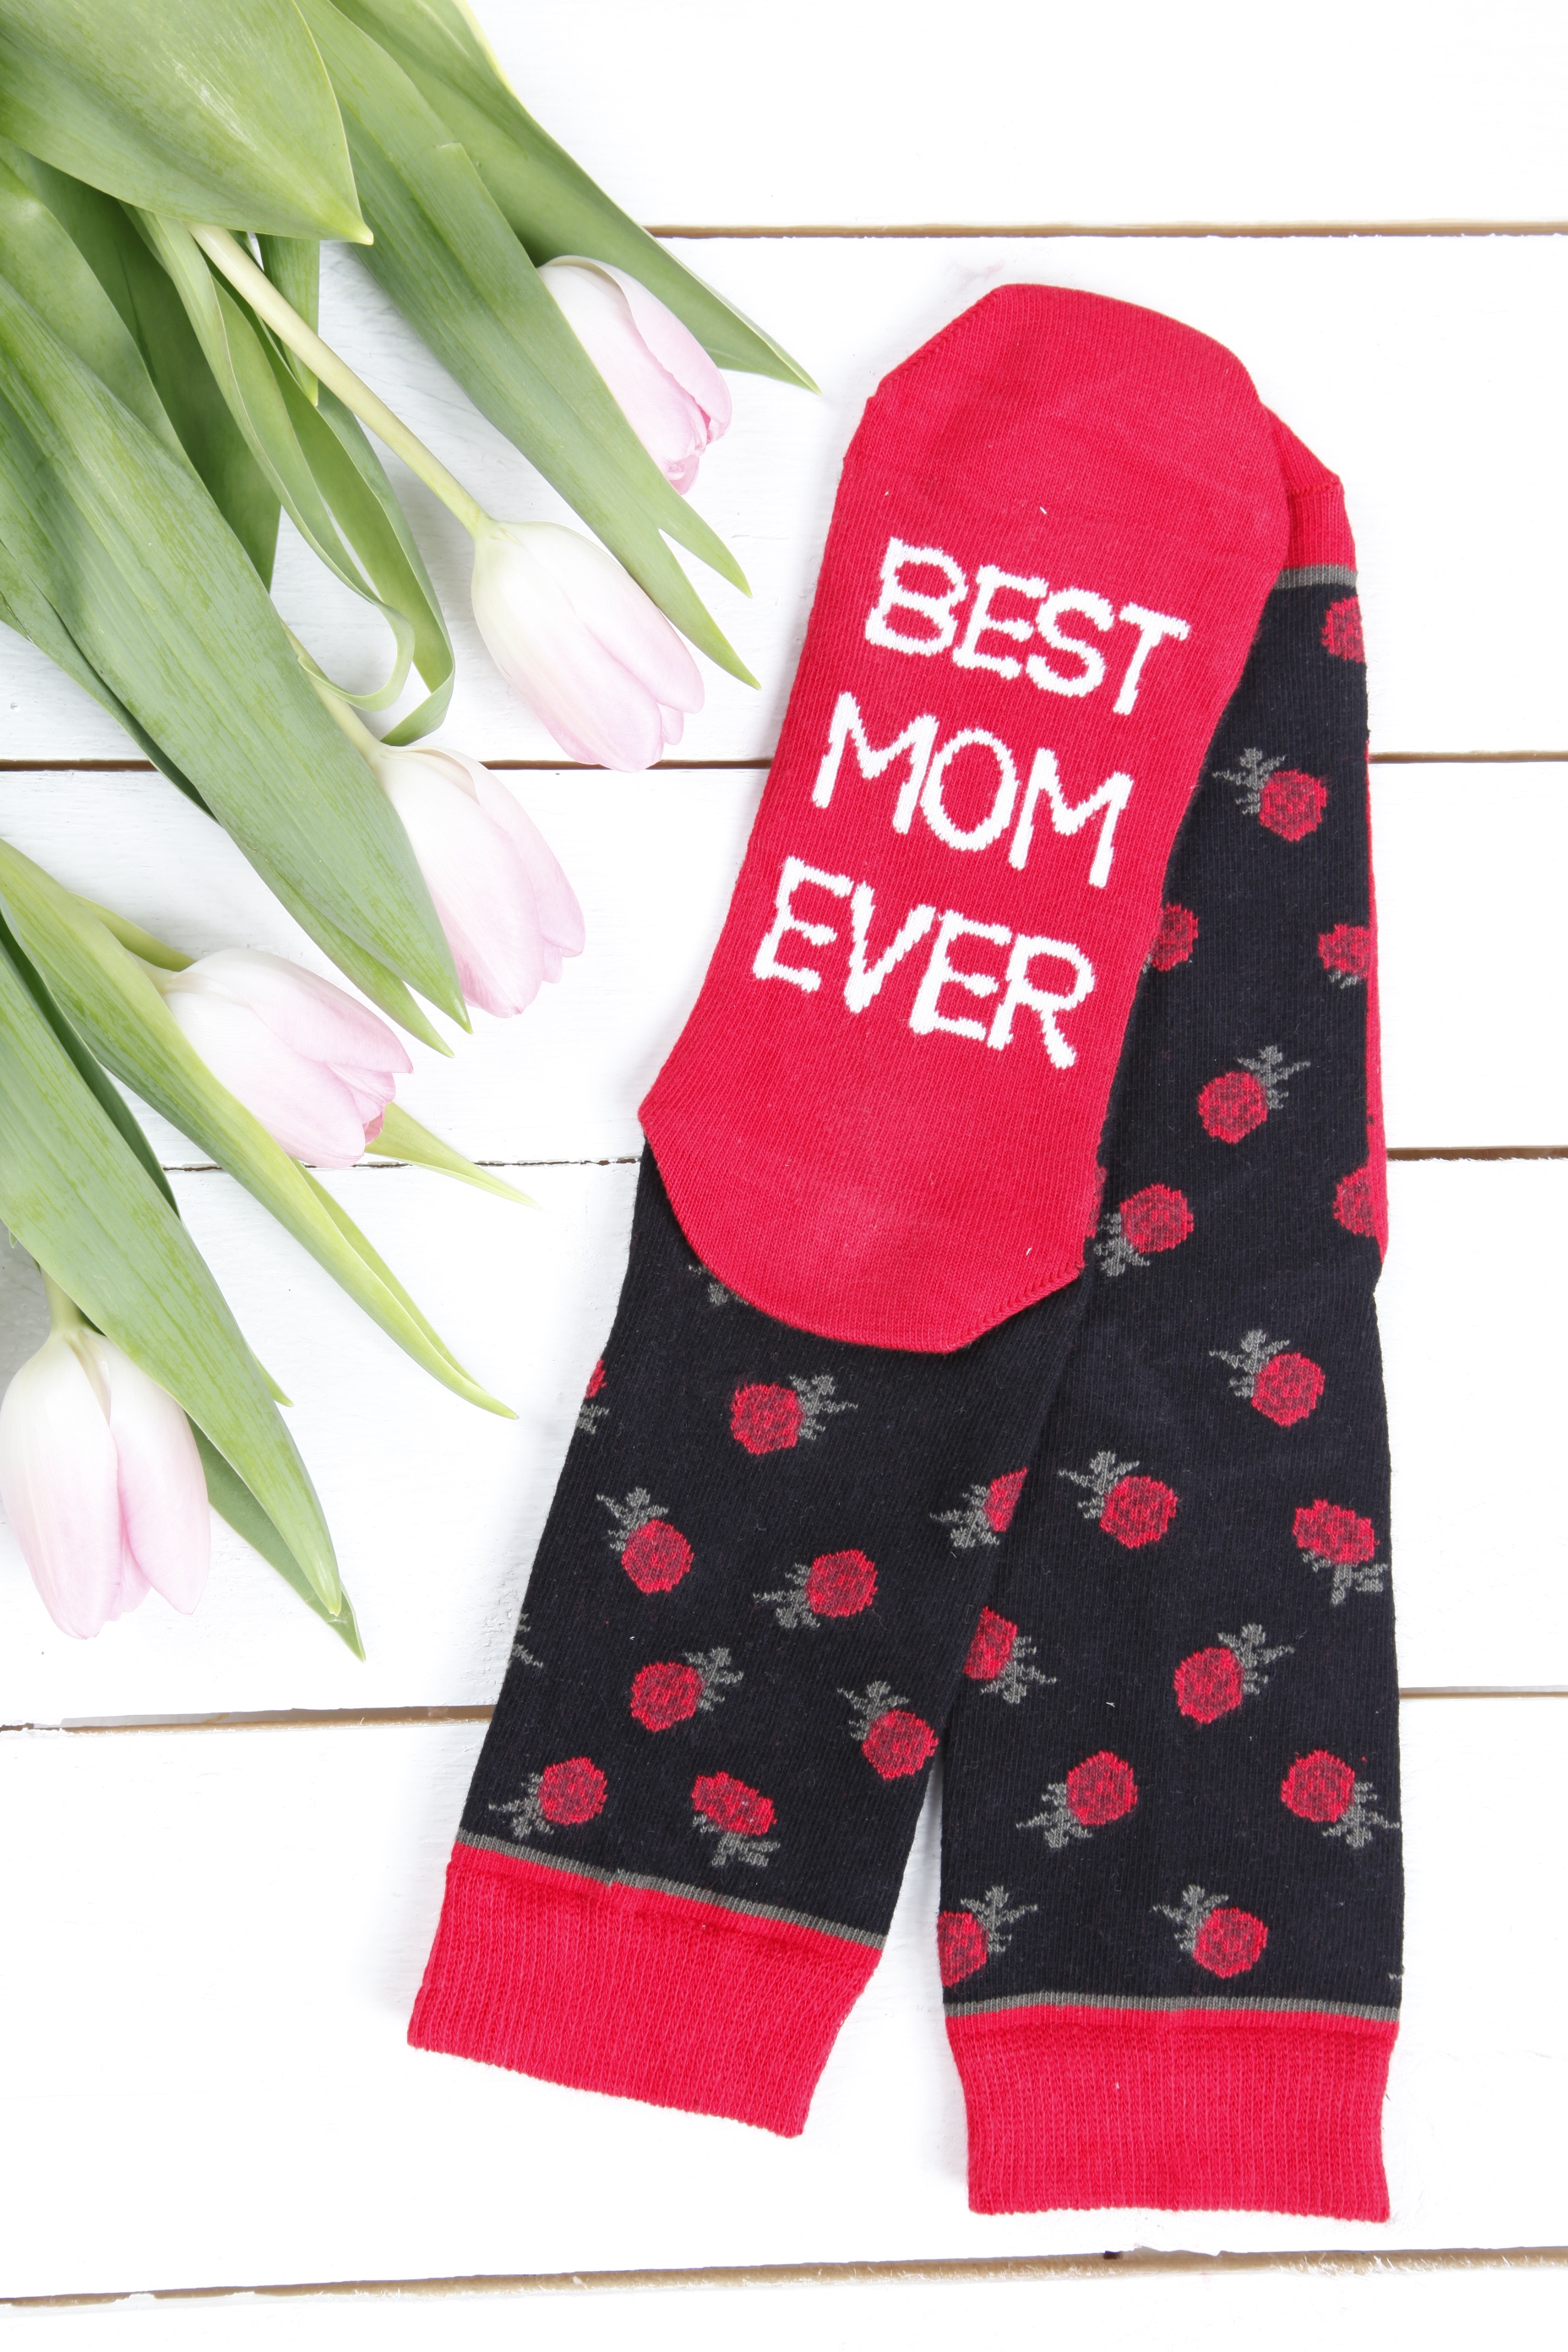 FRANKA socks for beloved mom, red roses pattern